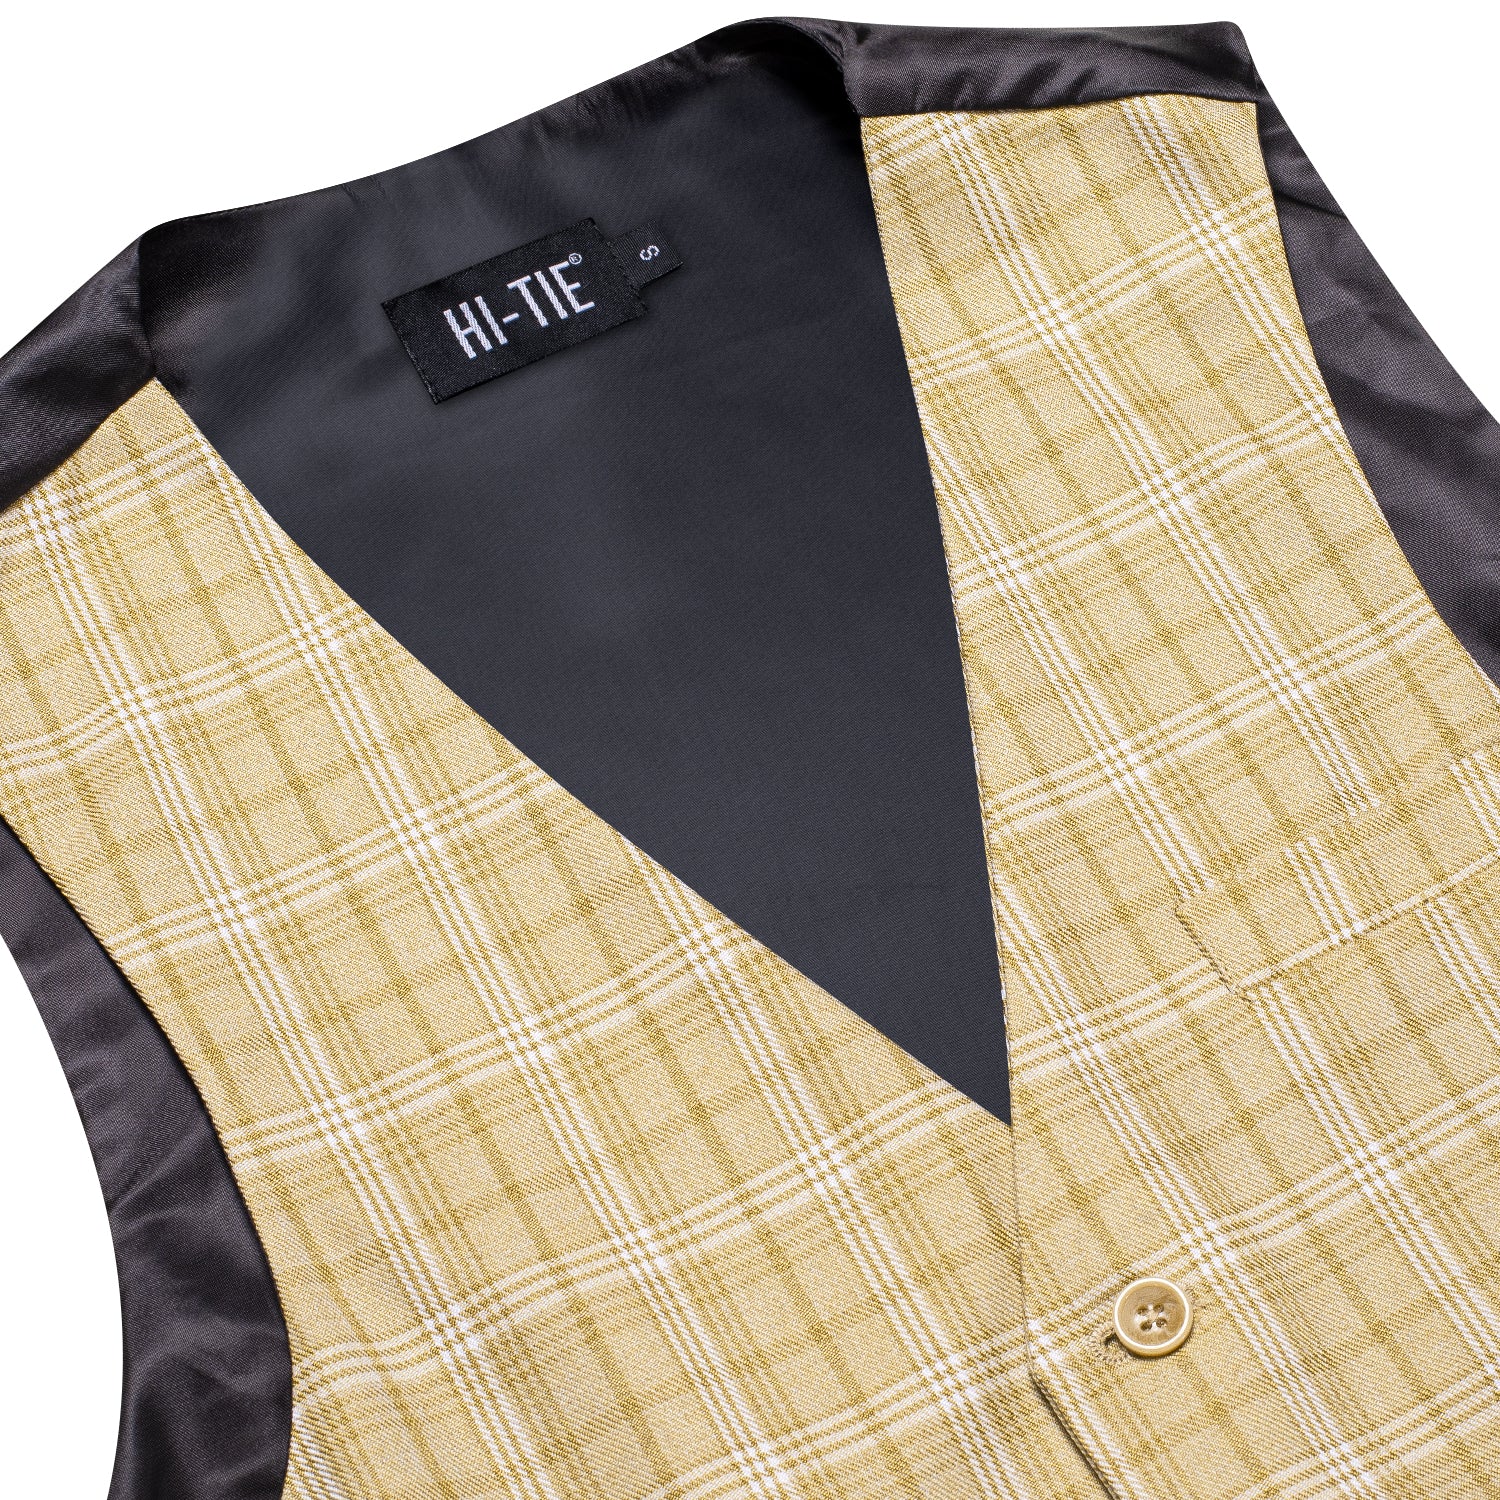 New Light Yellow White Plaid Silk England Style Men's Single Vest Waistcoat